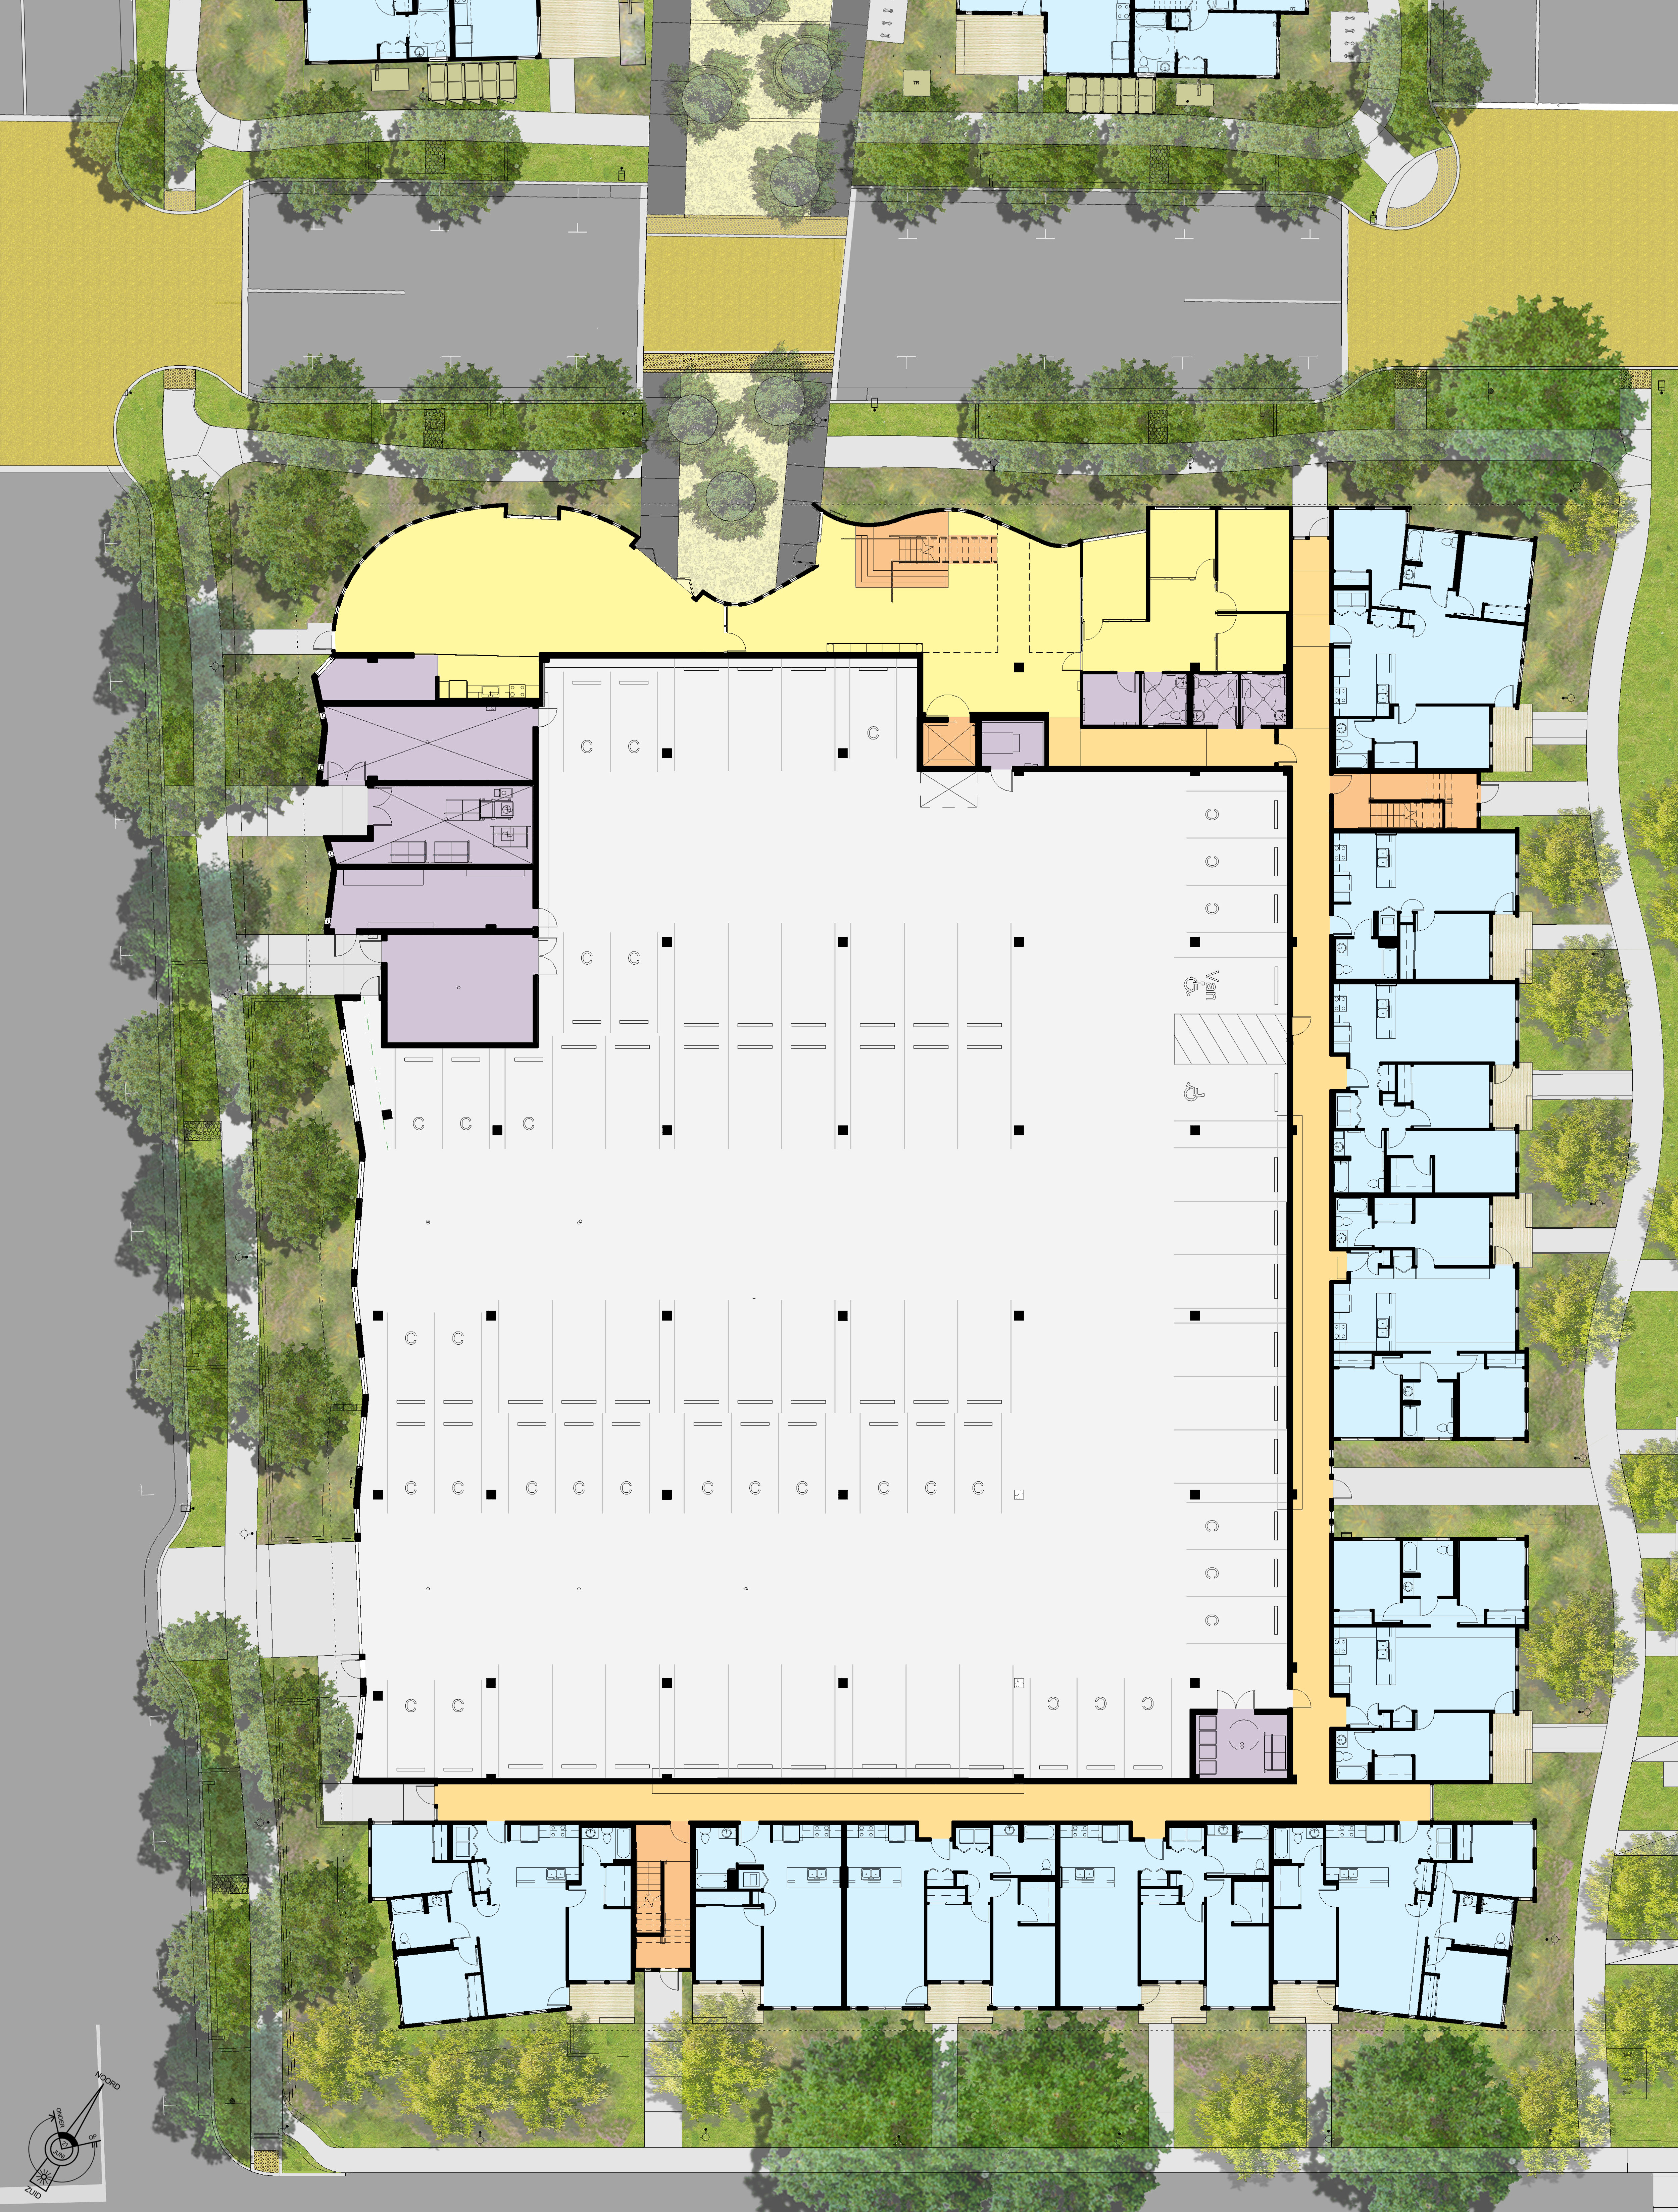 Level one site plan for Tassafaronga Village in East Oakland, CA. 